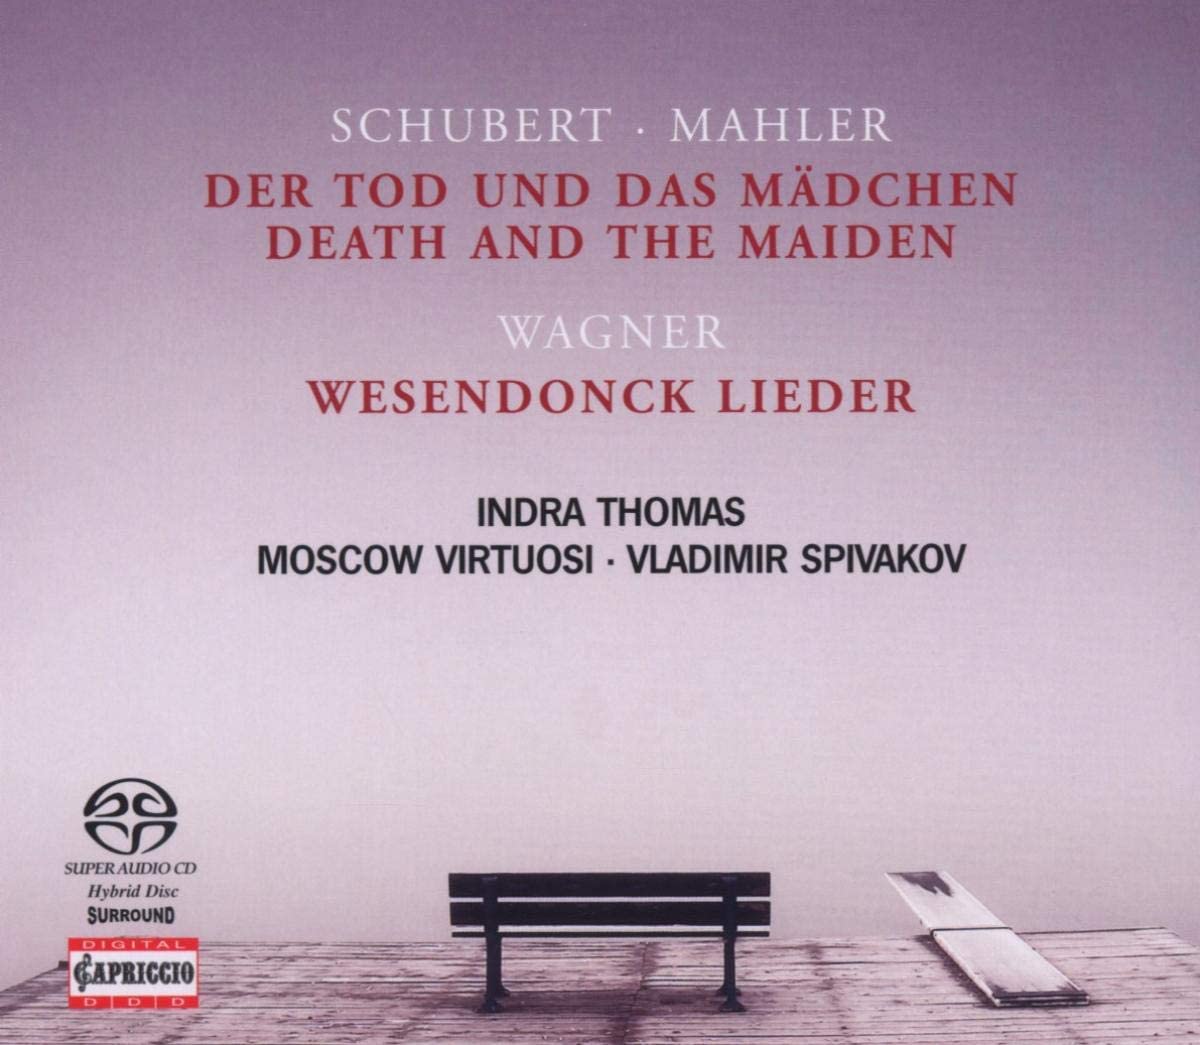 Schubert: String Quartet No. 14 ( Death and the Maiden ) / Wagner: Wesendonck Lieder / Mahler: